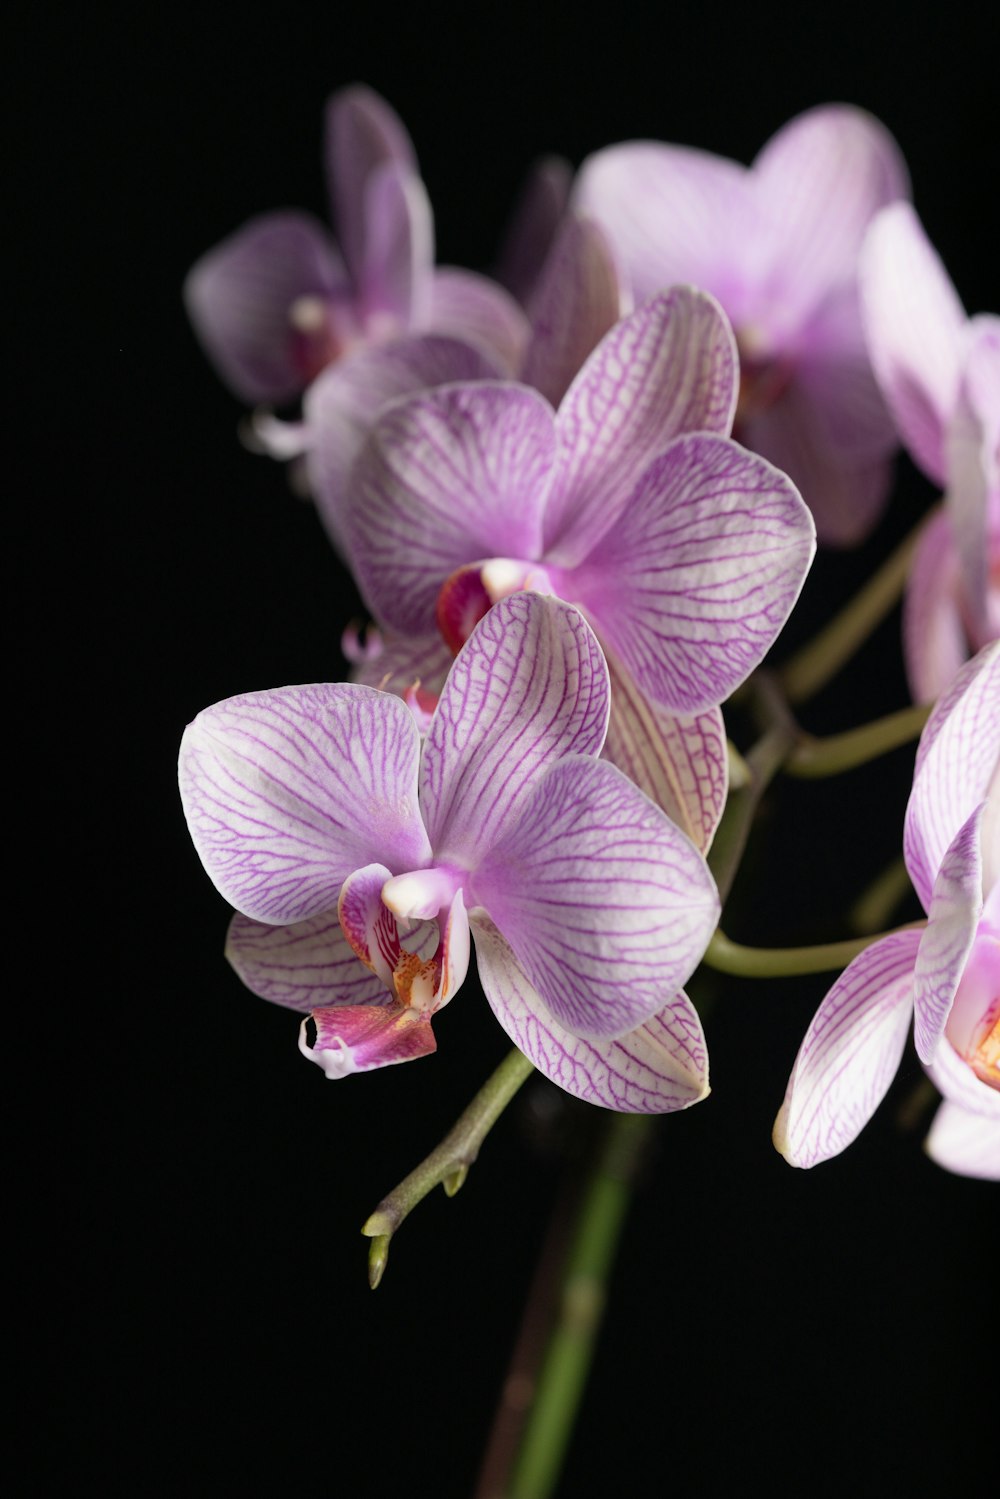 orquídeas de mariposa roxa e branca em flor